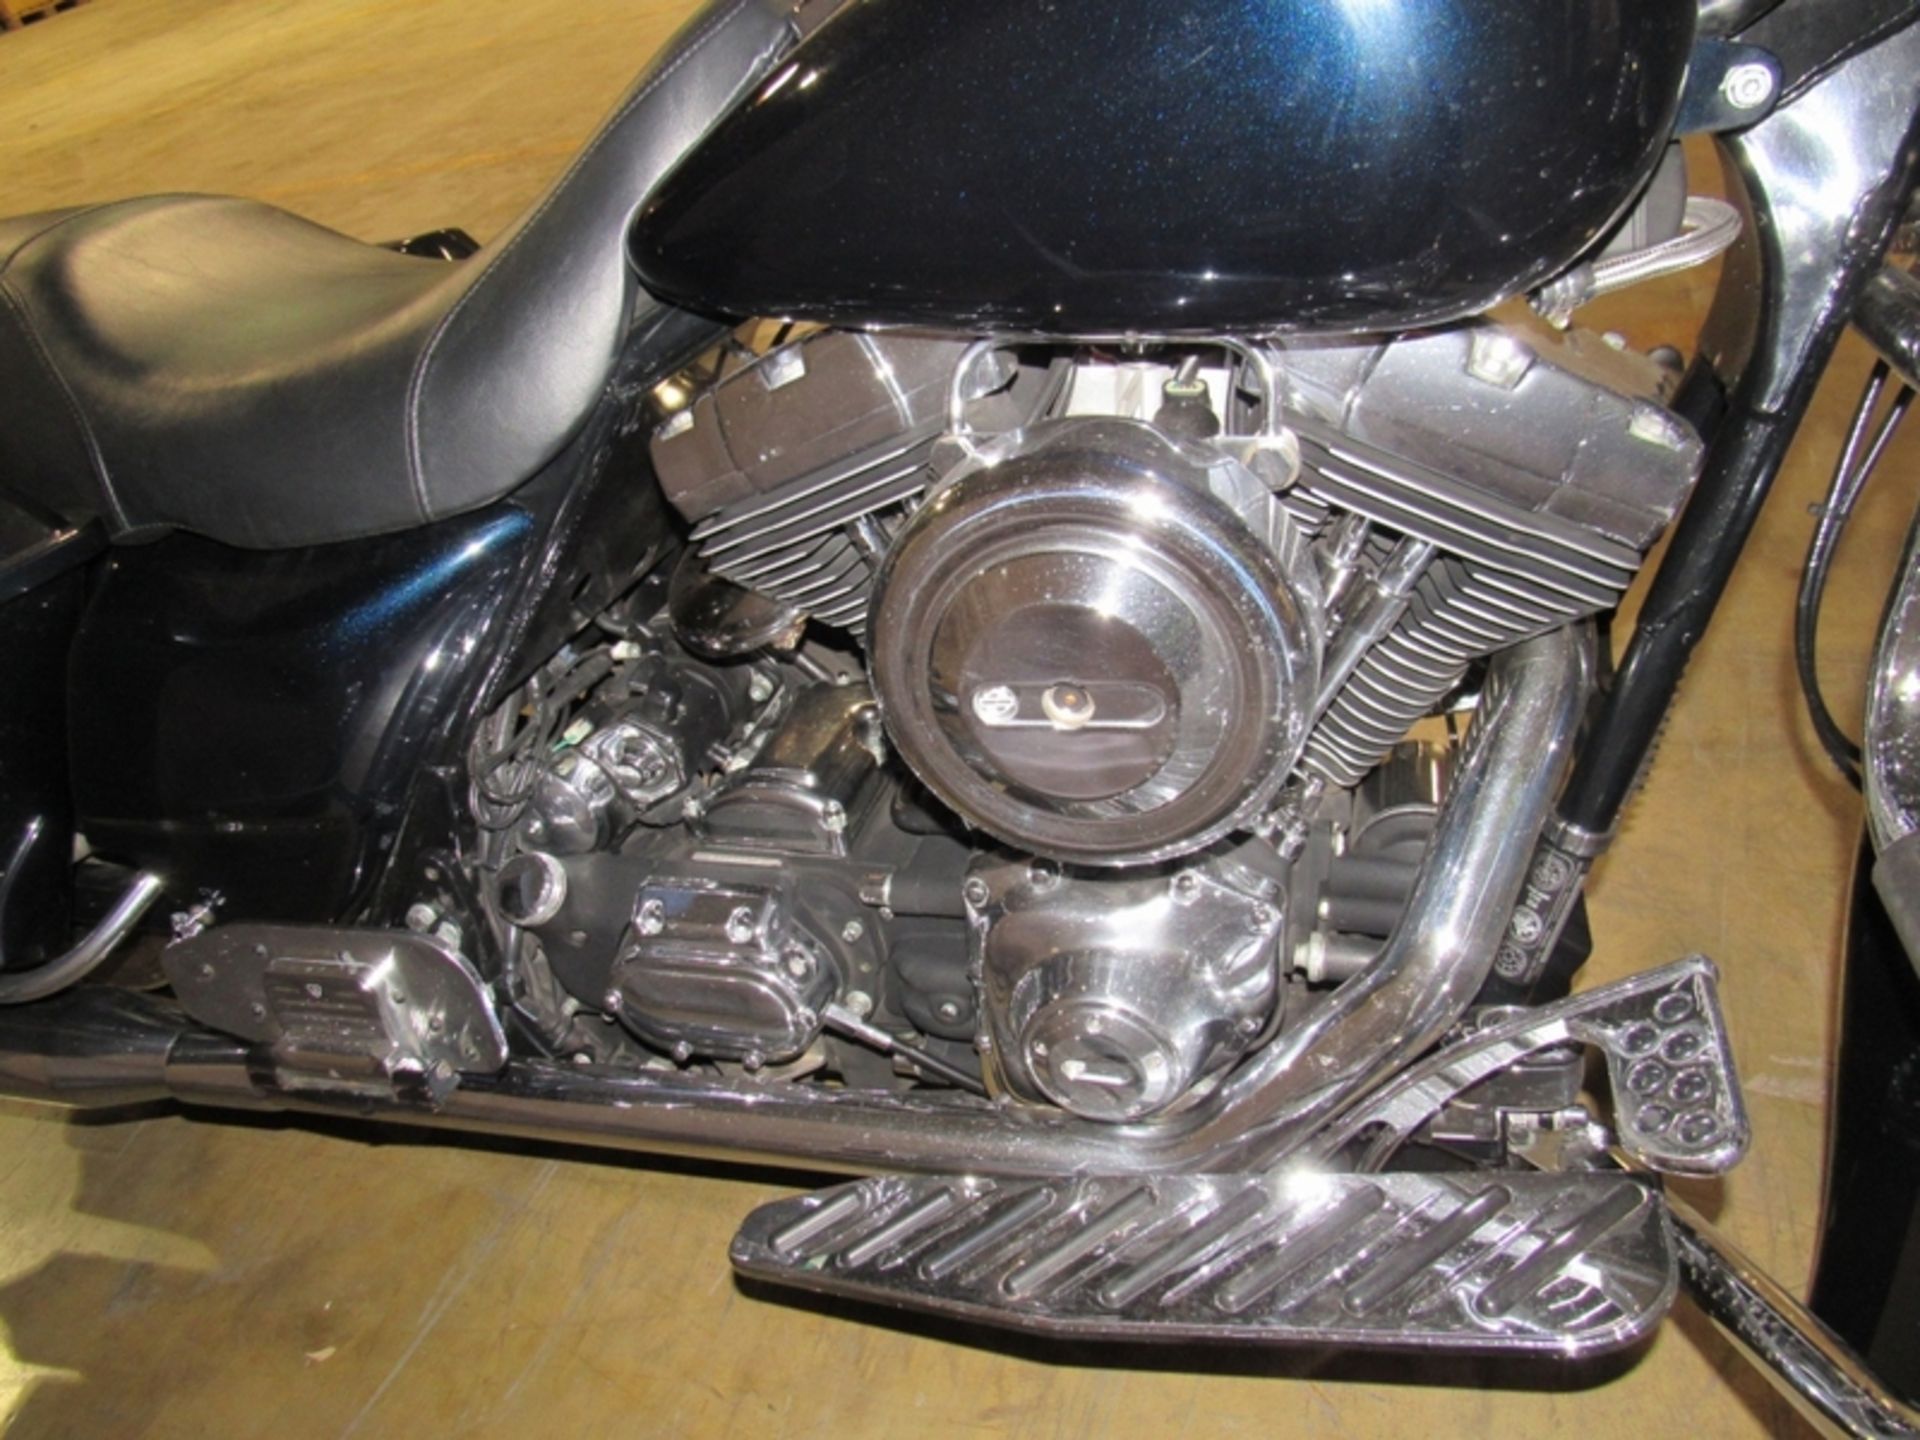 1999 Harley Davidson FLHTCUI Ultra Classic Location: Chattanooga TN Year: 1999 Make: Harley Davidson - Image 6 of 10